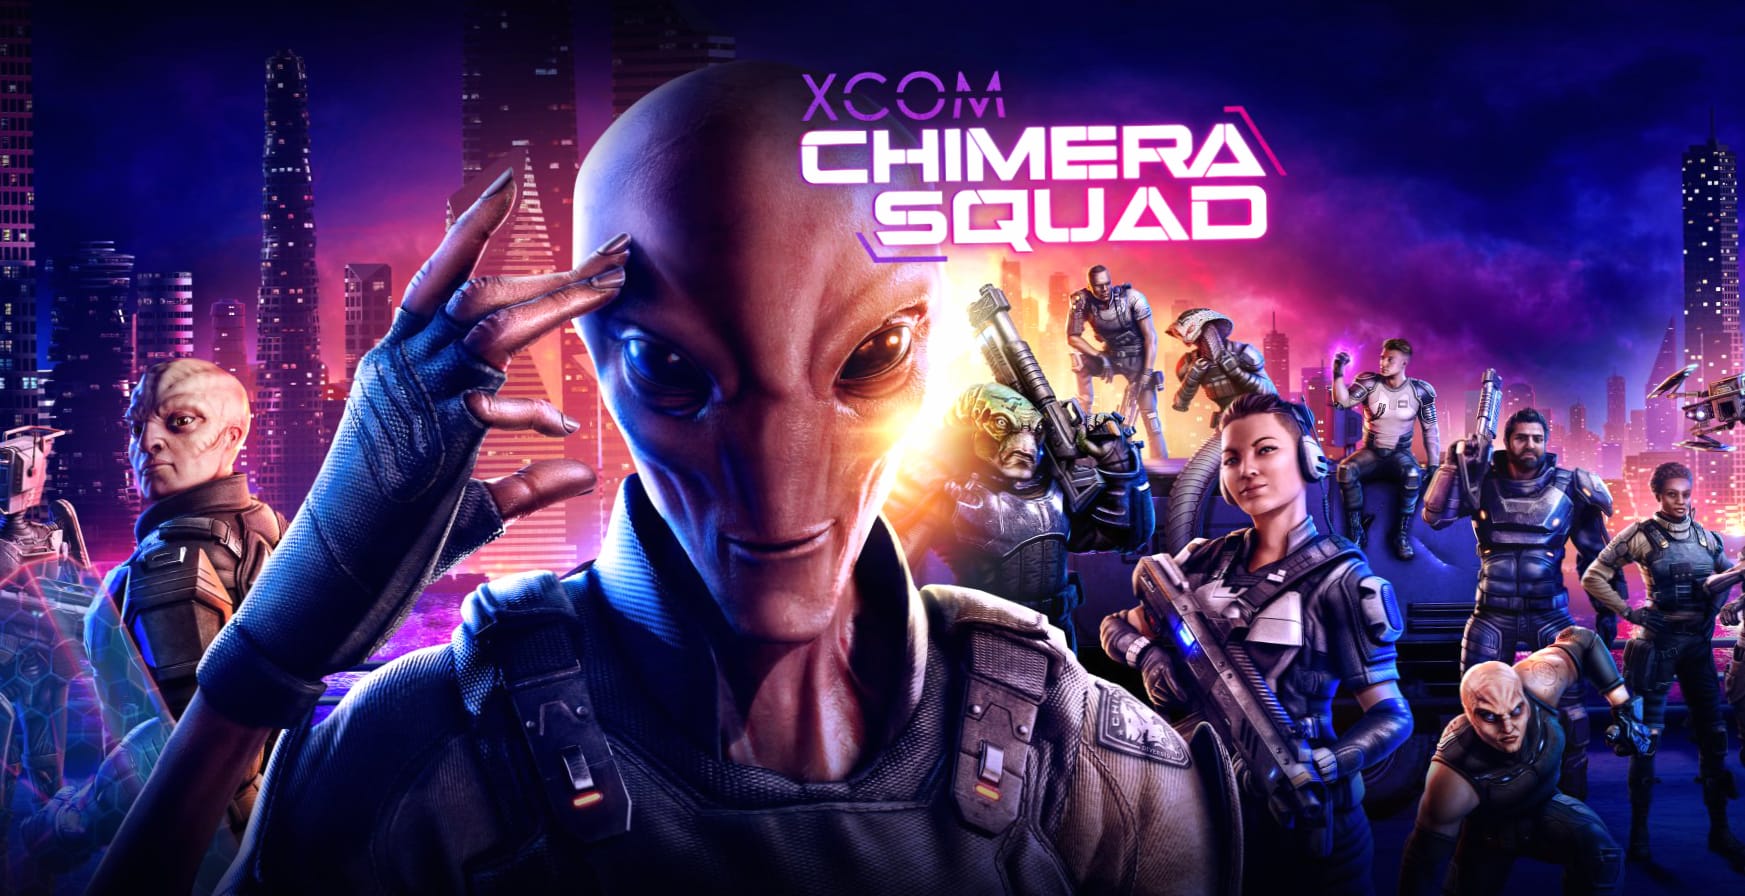 XCOM Chimera Squad wallpapers HD quality